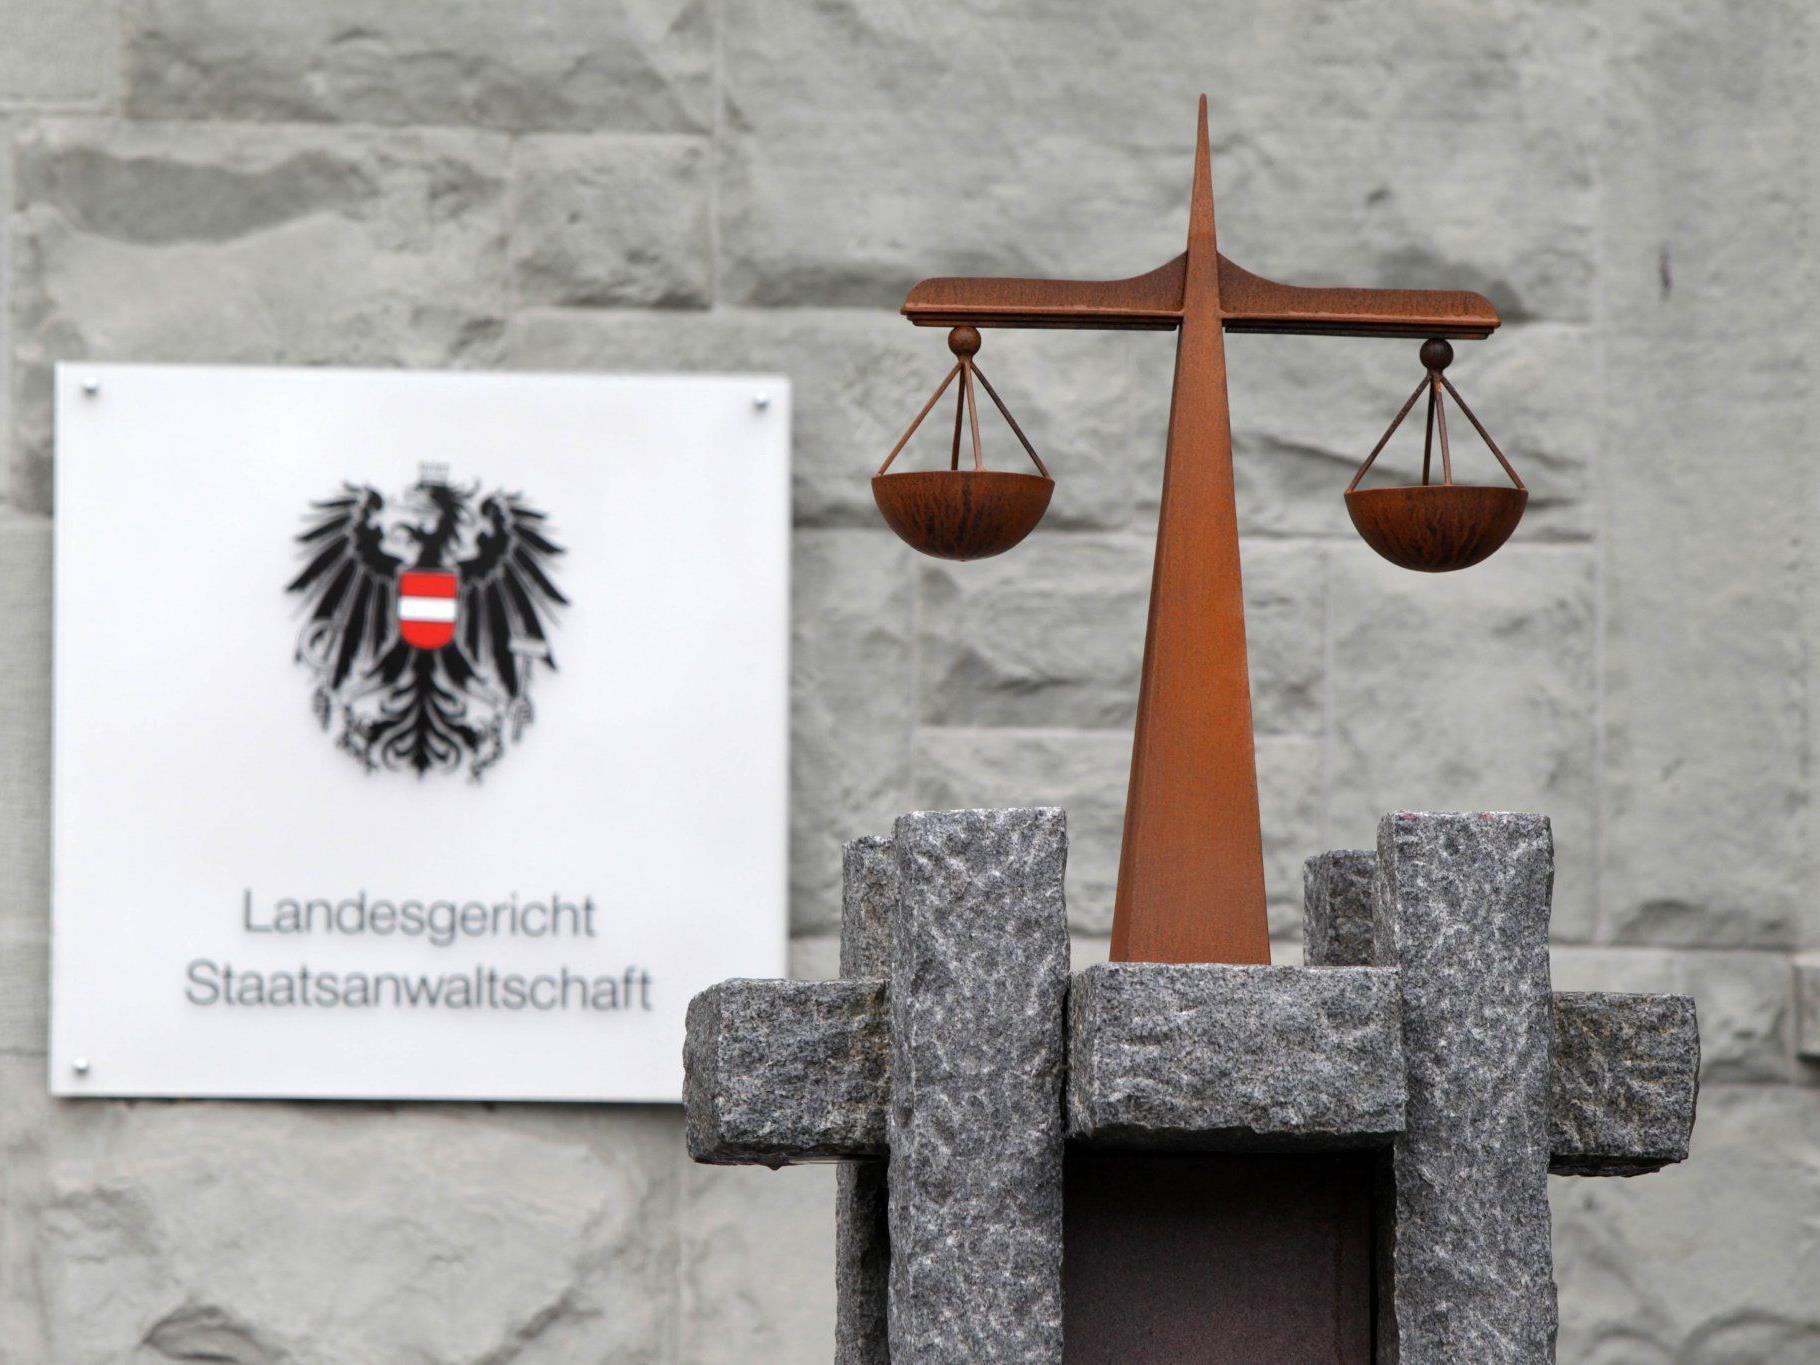 Internetbetrug im großen Stil - 22-Jähriger am Landesgericht Feldkirch verurteilt